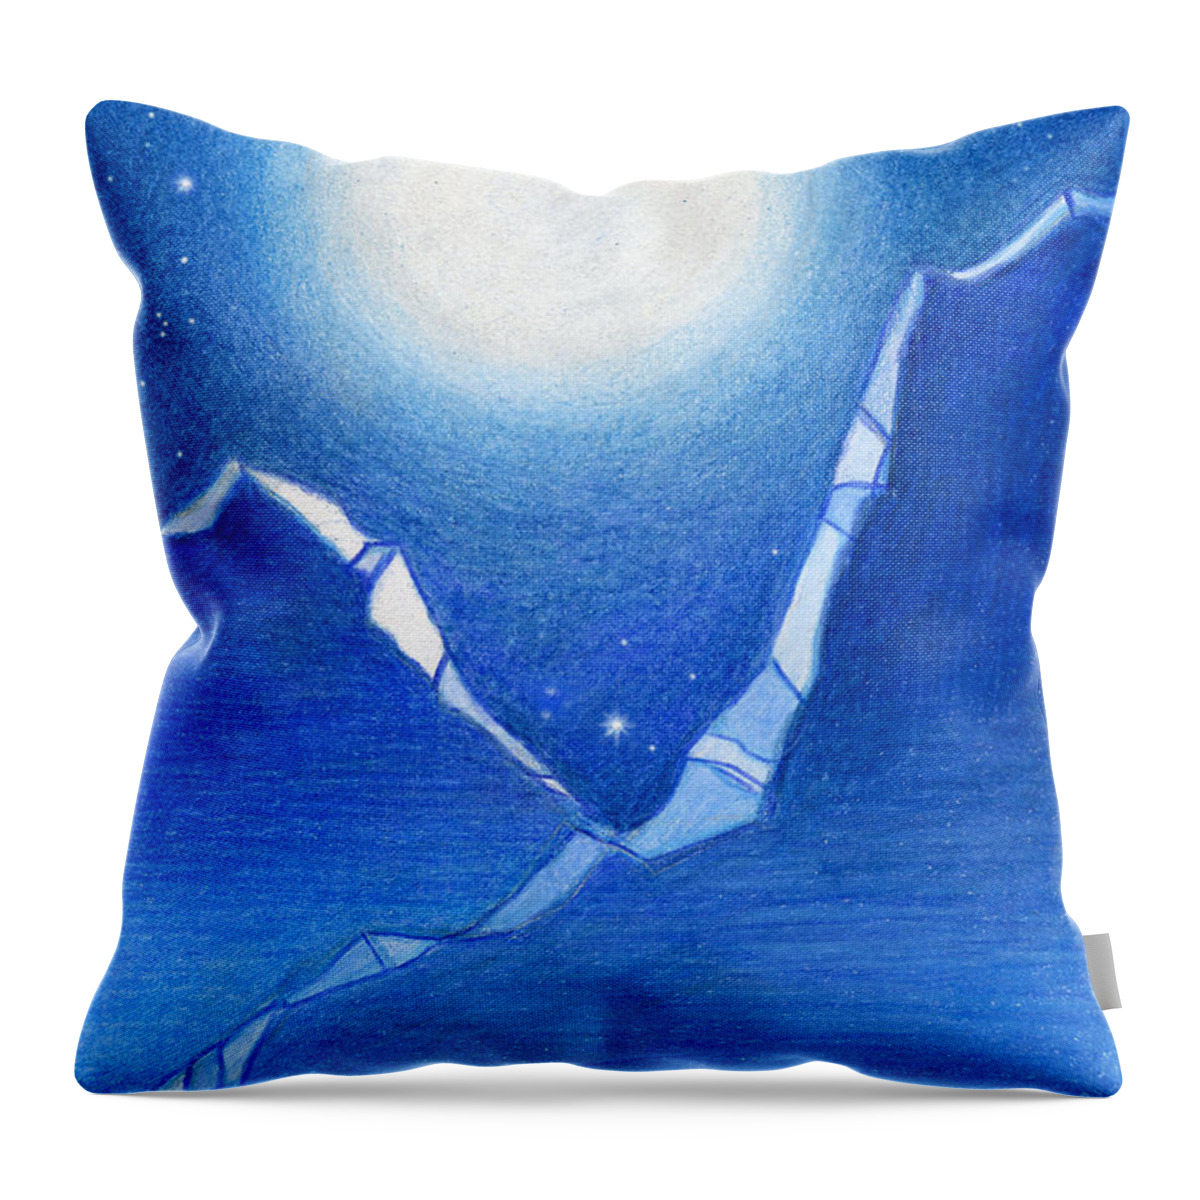 California Artist Throw Pillow featuring the drawing Moon Mountain by Deborah Ann Good